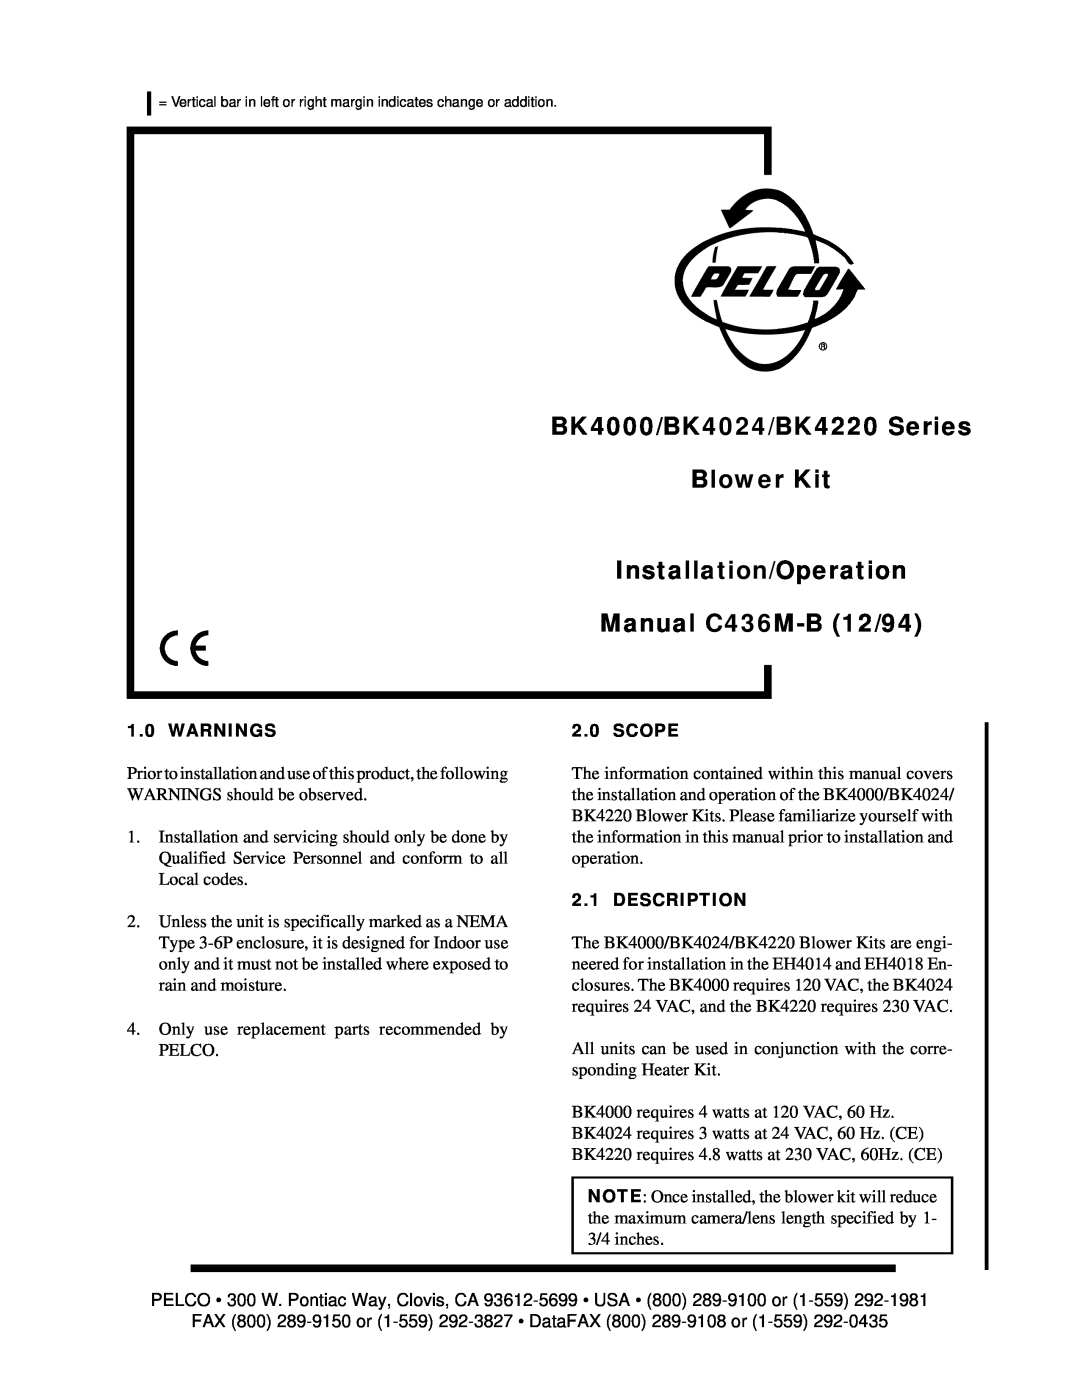 Pelco operation manual Warnings, Scope, Description, BK4000/BK4024/BK4220 Series, Blower Kit, Installation/Operation 